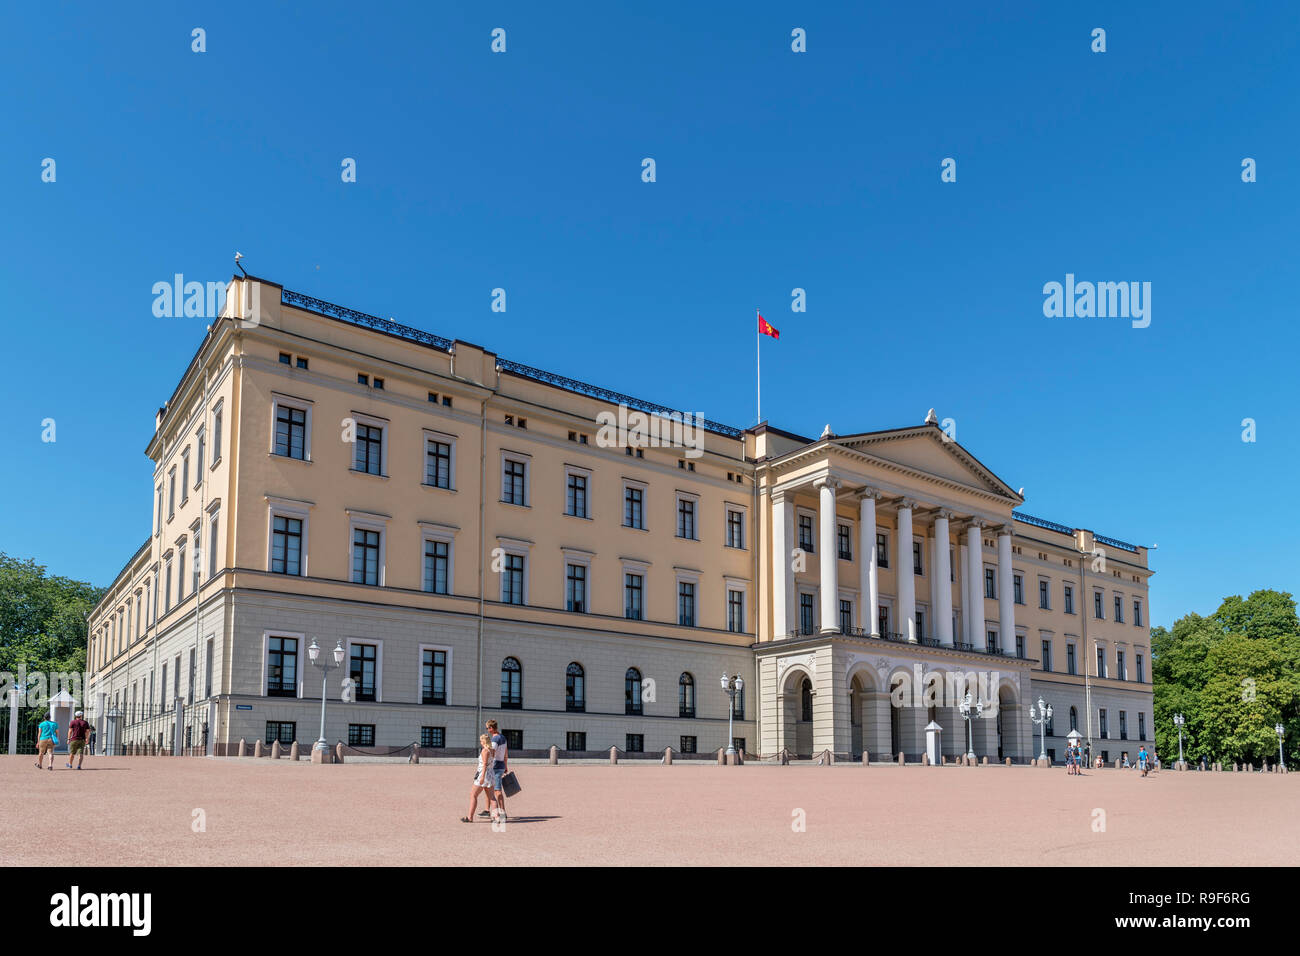 Il Royal Palace (Det Kongelige slott), Slottsparken, Oslo, Norvegia Foto Stock